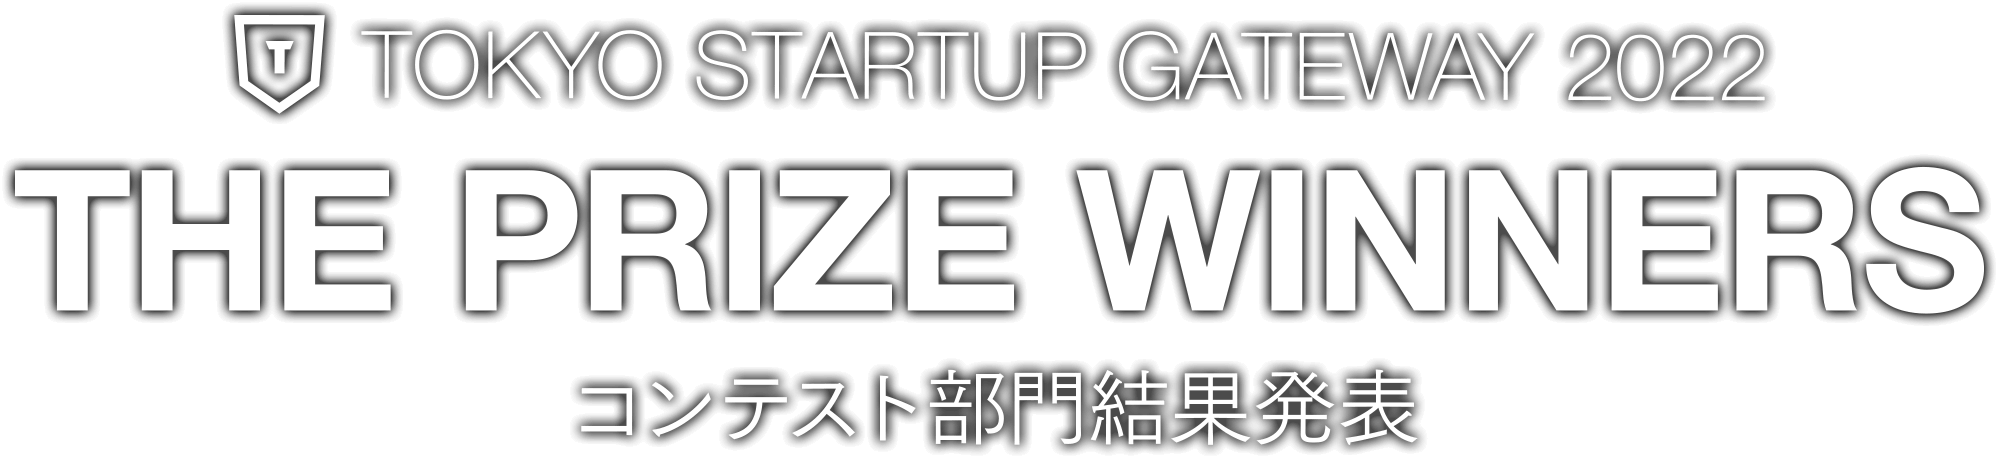 TOKYO STARTUP GATEWAY 2022 コンテスト部門 結果発表